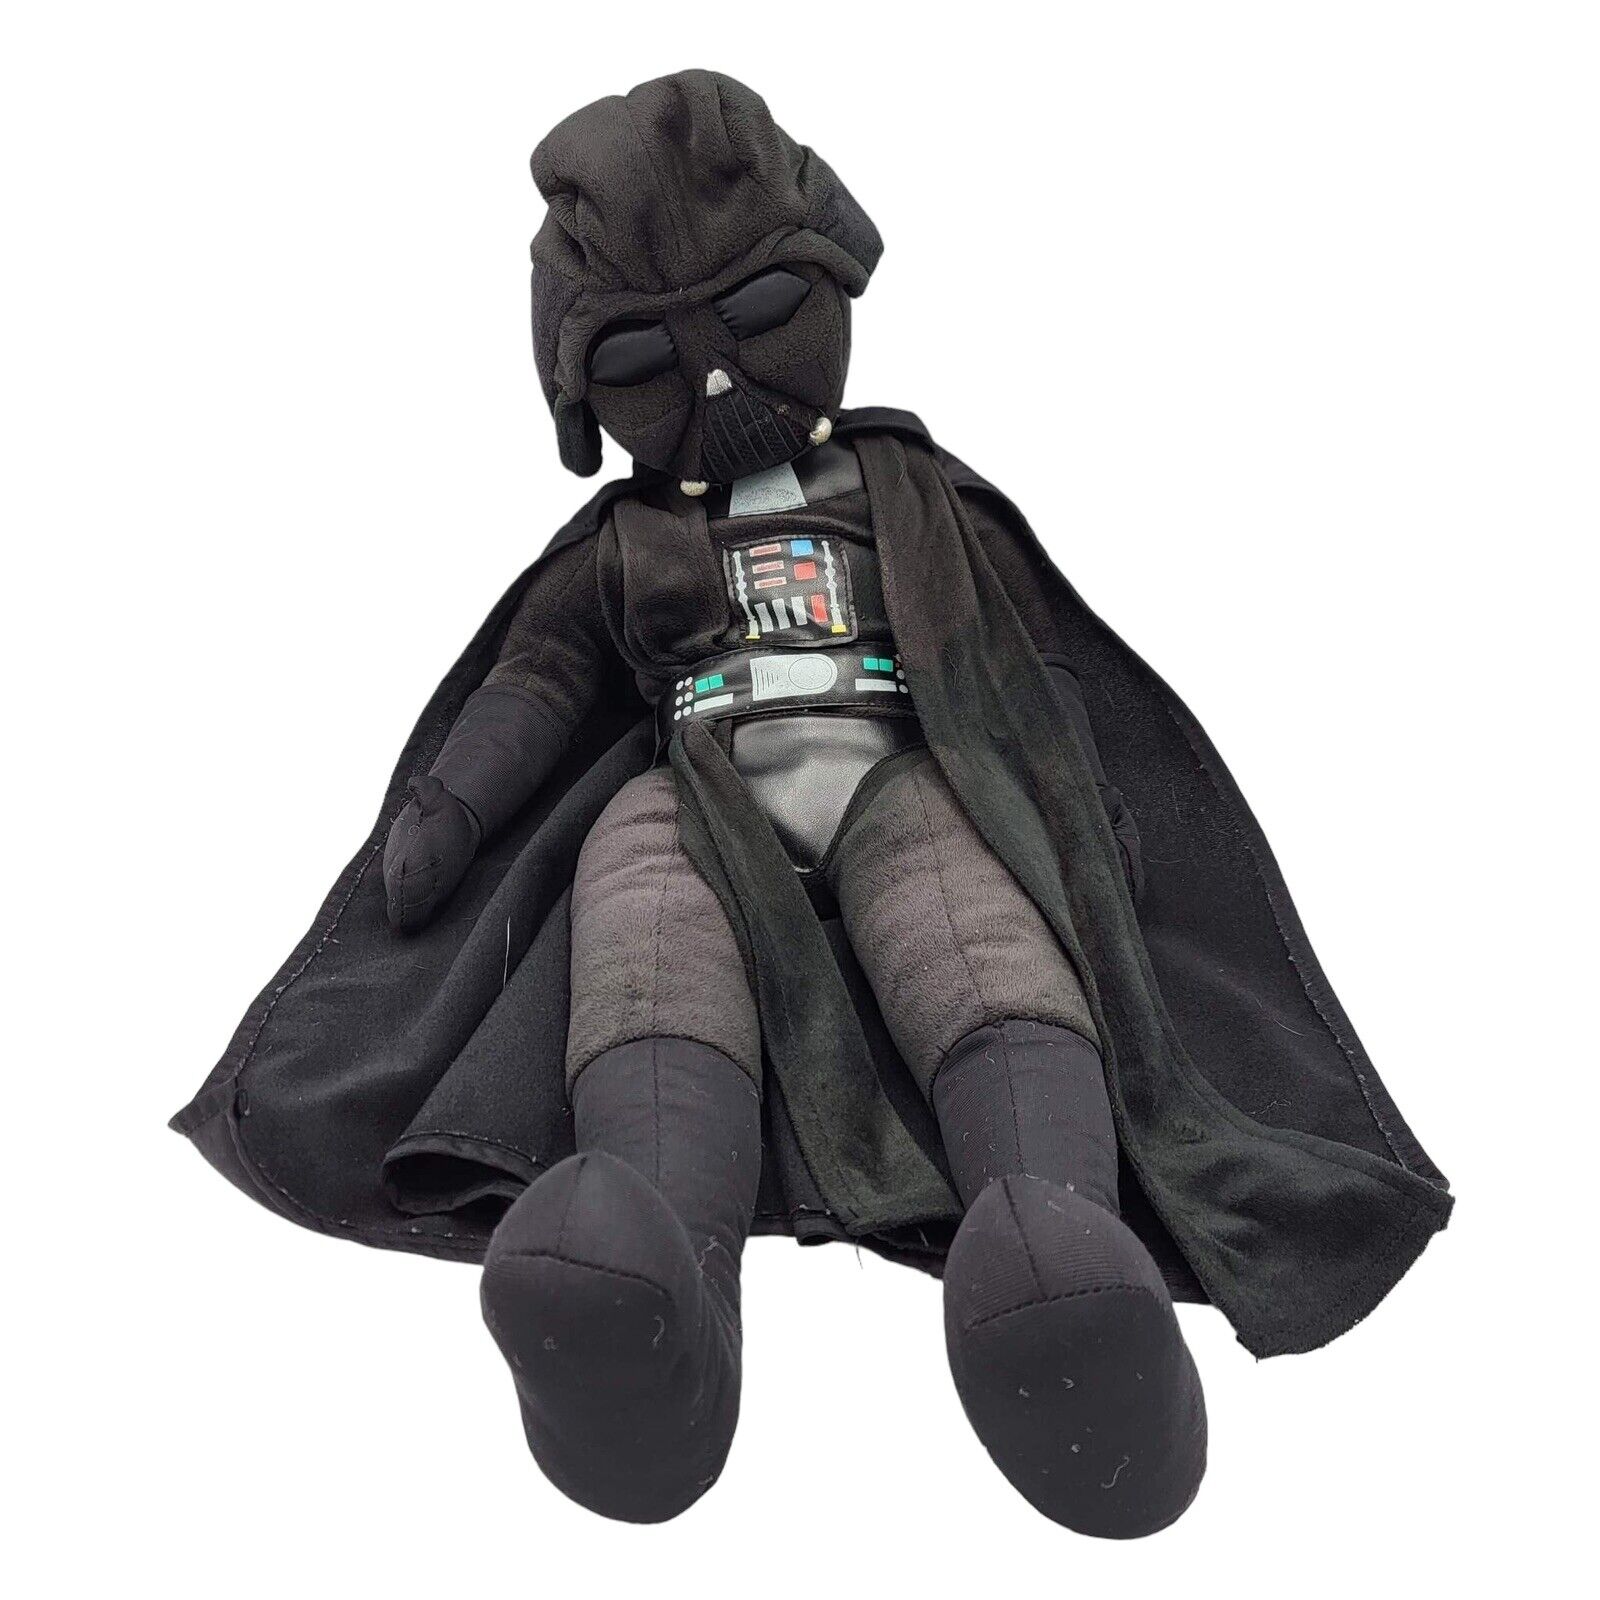 Star Wars Darth Vader Large 27" Pillow Buddy Pal Plush Stuffed Toy